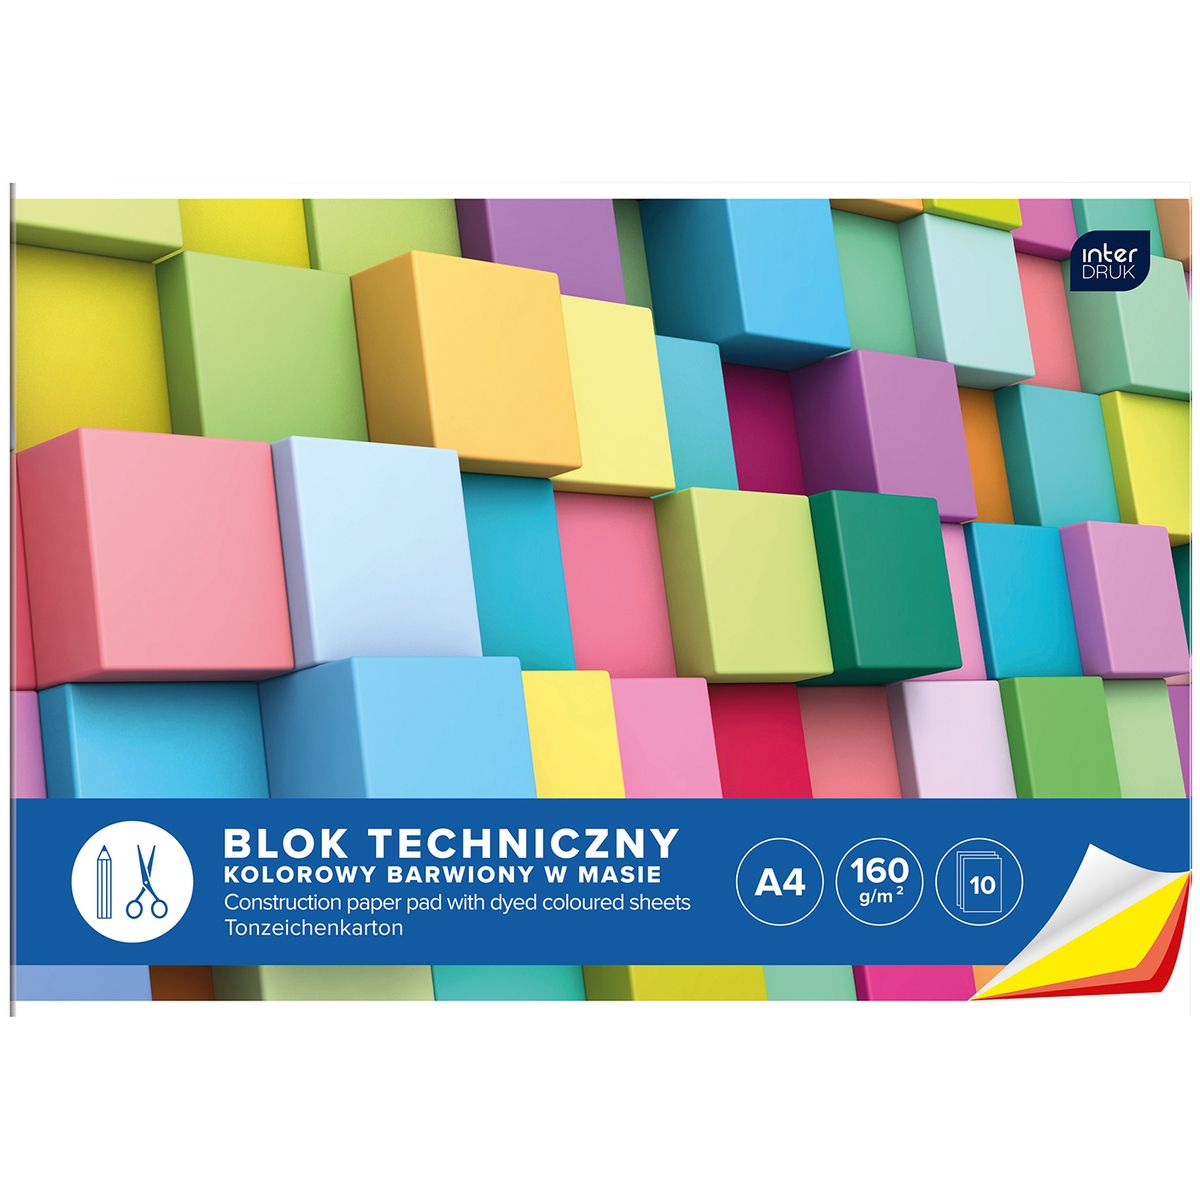 Blok techniczny Interdruk bloki A4 biały 160g 10k (BLTK)